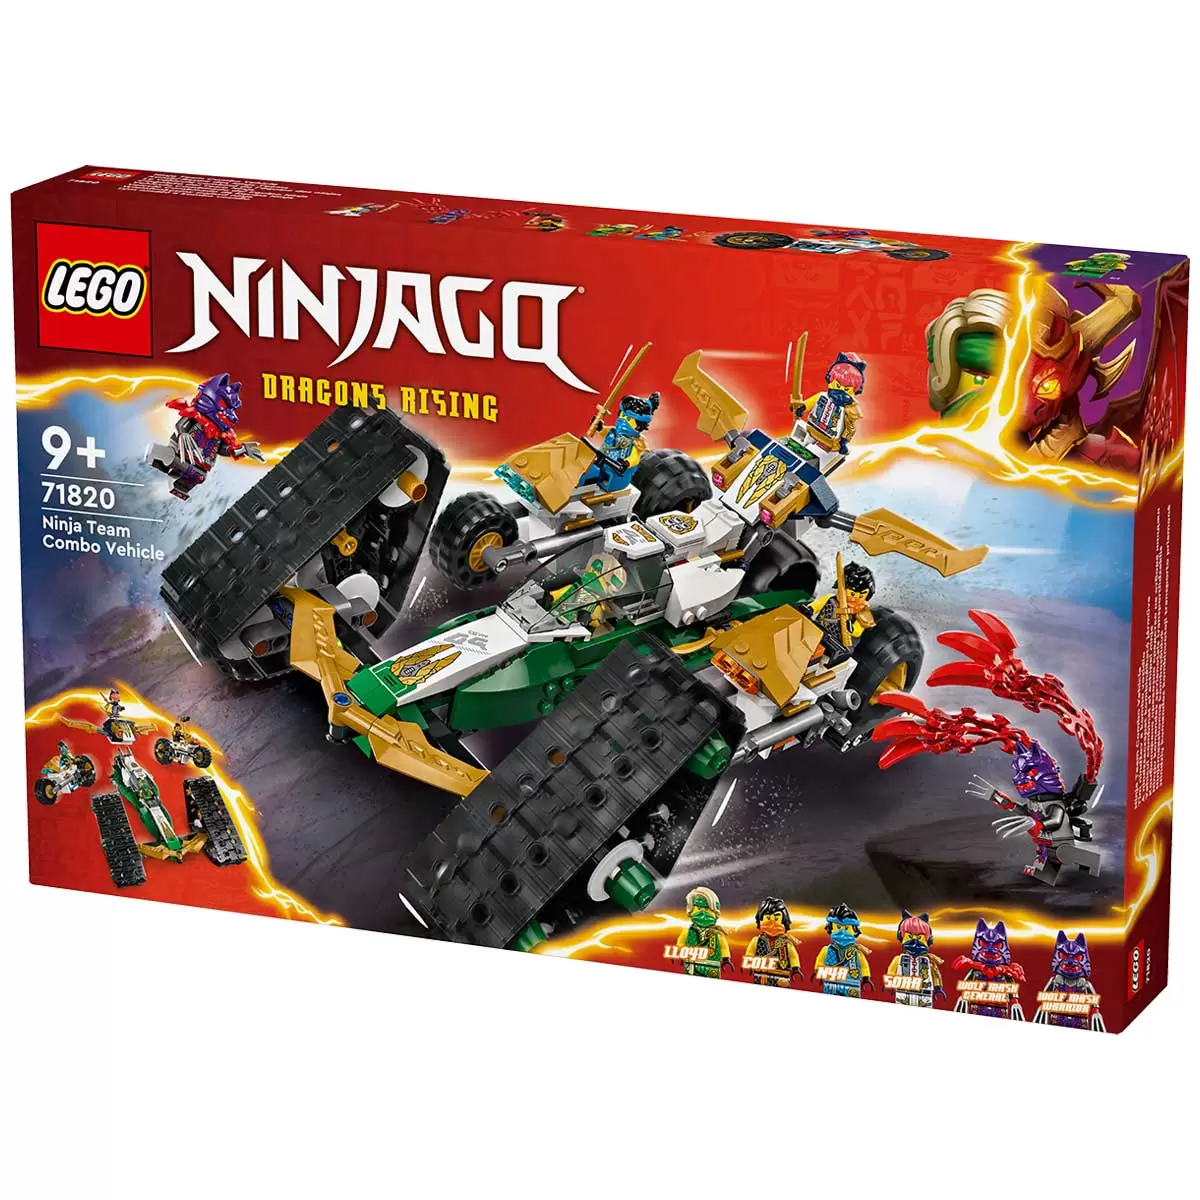 LEGO NINJAGO Ninja Team Combo Vehicle 71820